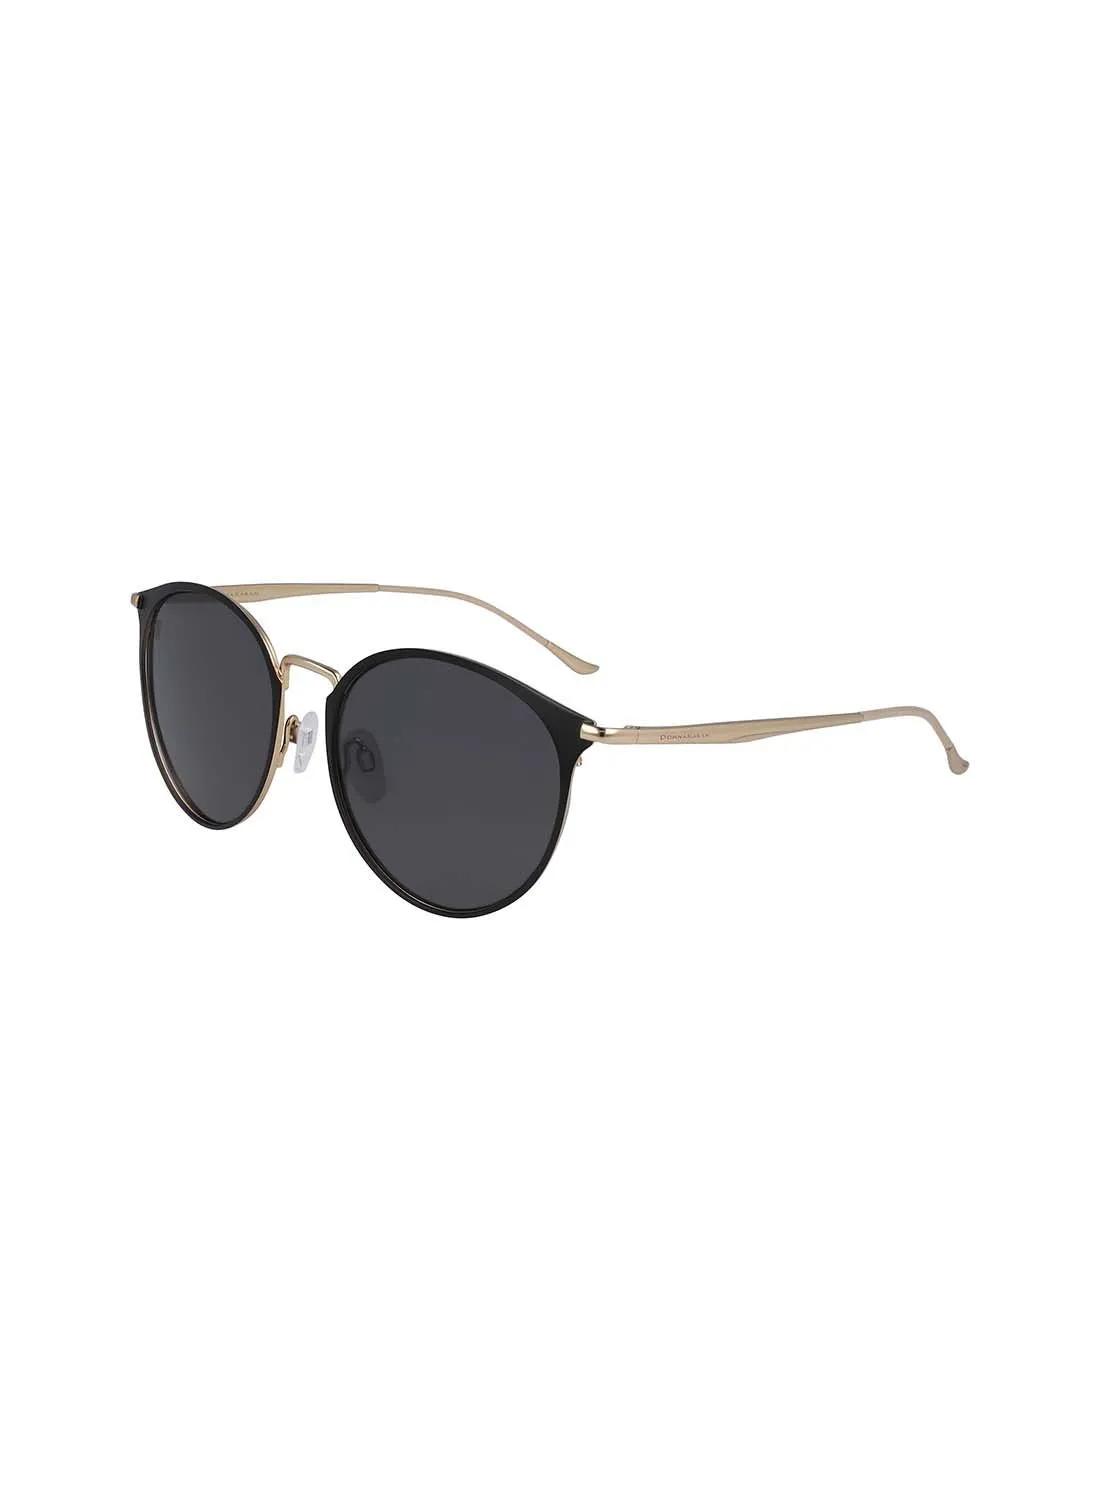 Donna Karan Full Rim Metal Round Sunglasses DO100S 5418 (002)